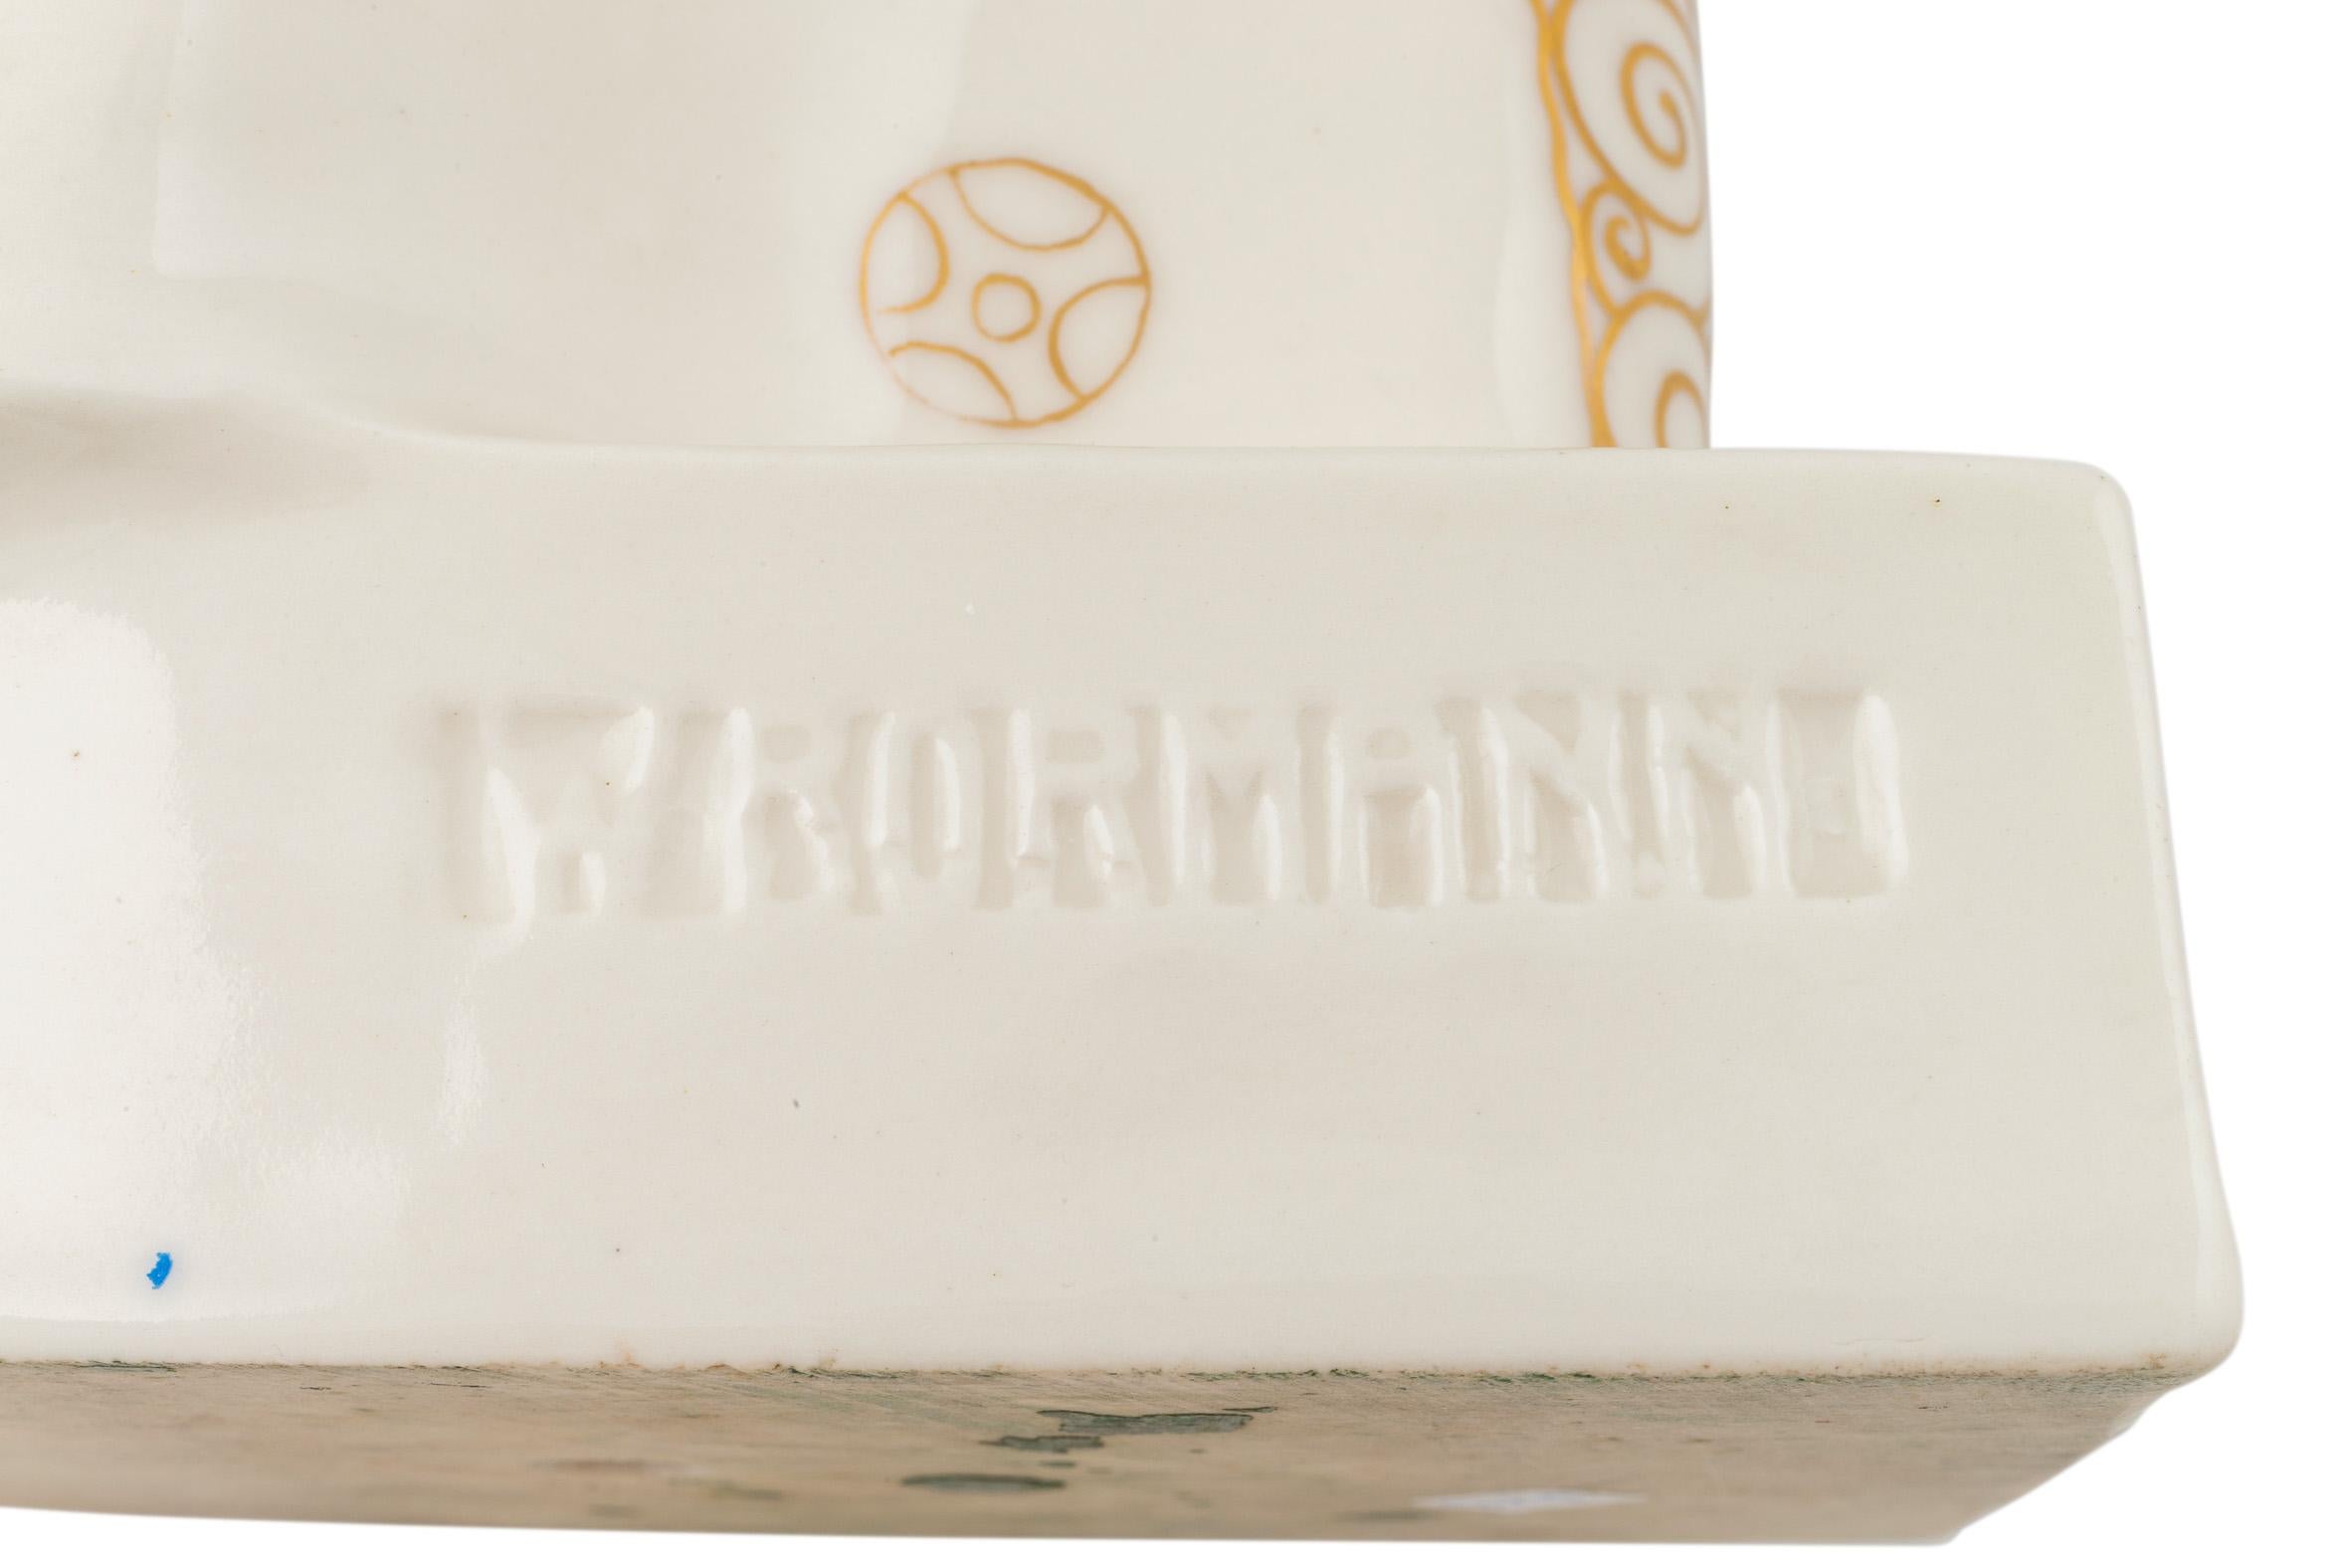 Ceramic sculpture respresenting a Water Carrier - designed by Wilhelm Bormann - manufacture attributed to Ernst Wahliss Wien - Viennese Secession circa 1903 Austrian Art Nouveau - Jugendstil

Wilhelm Bormann studied at the Vienna School of Arts